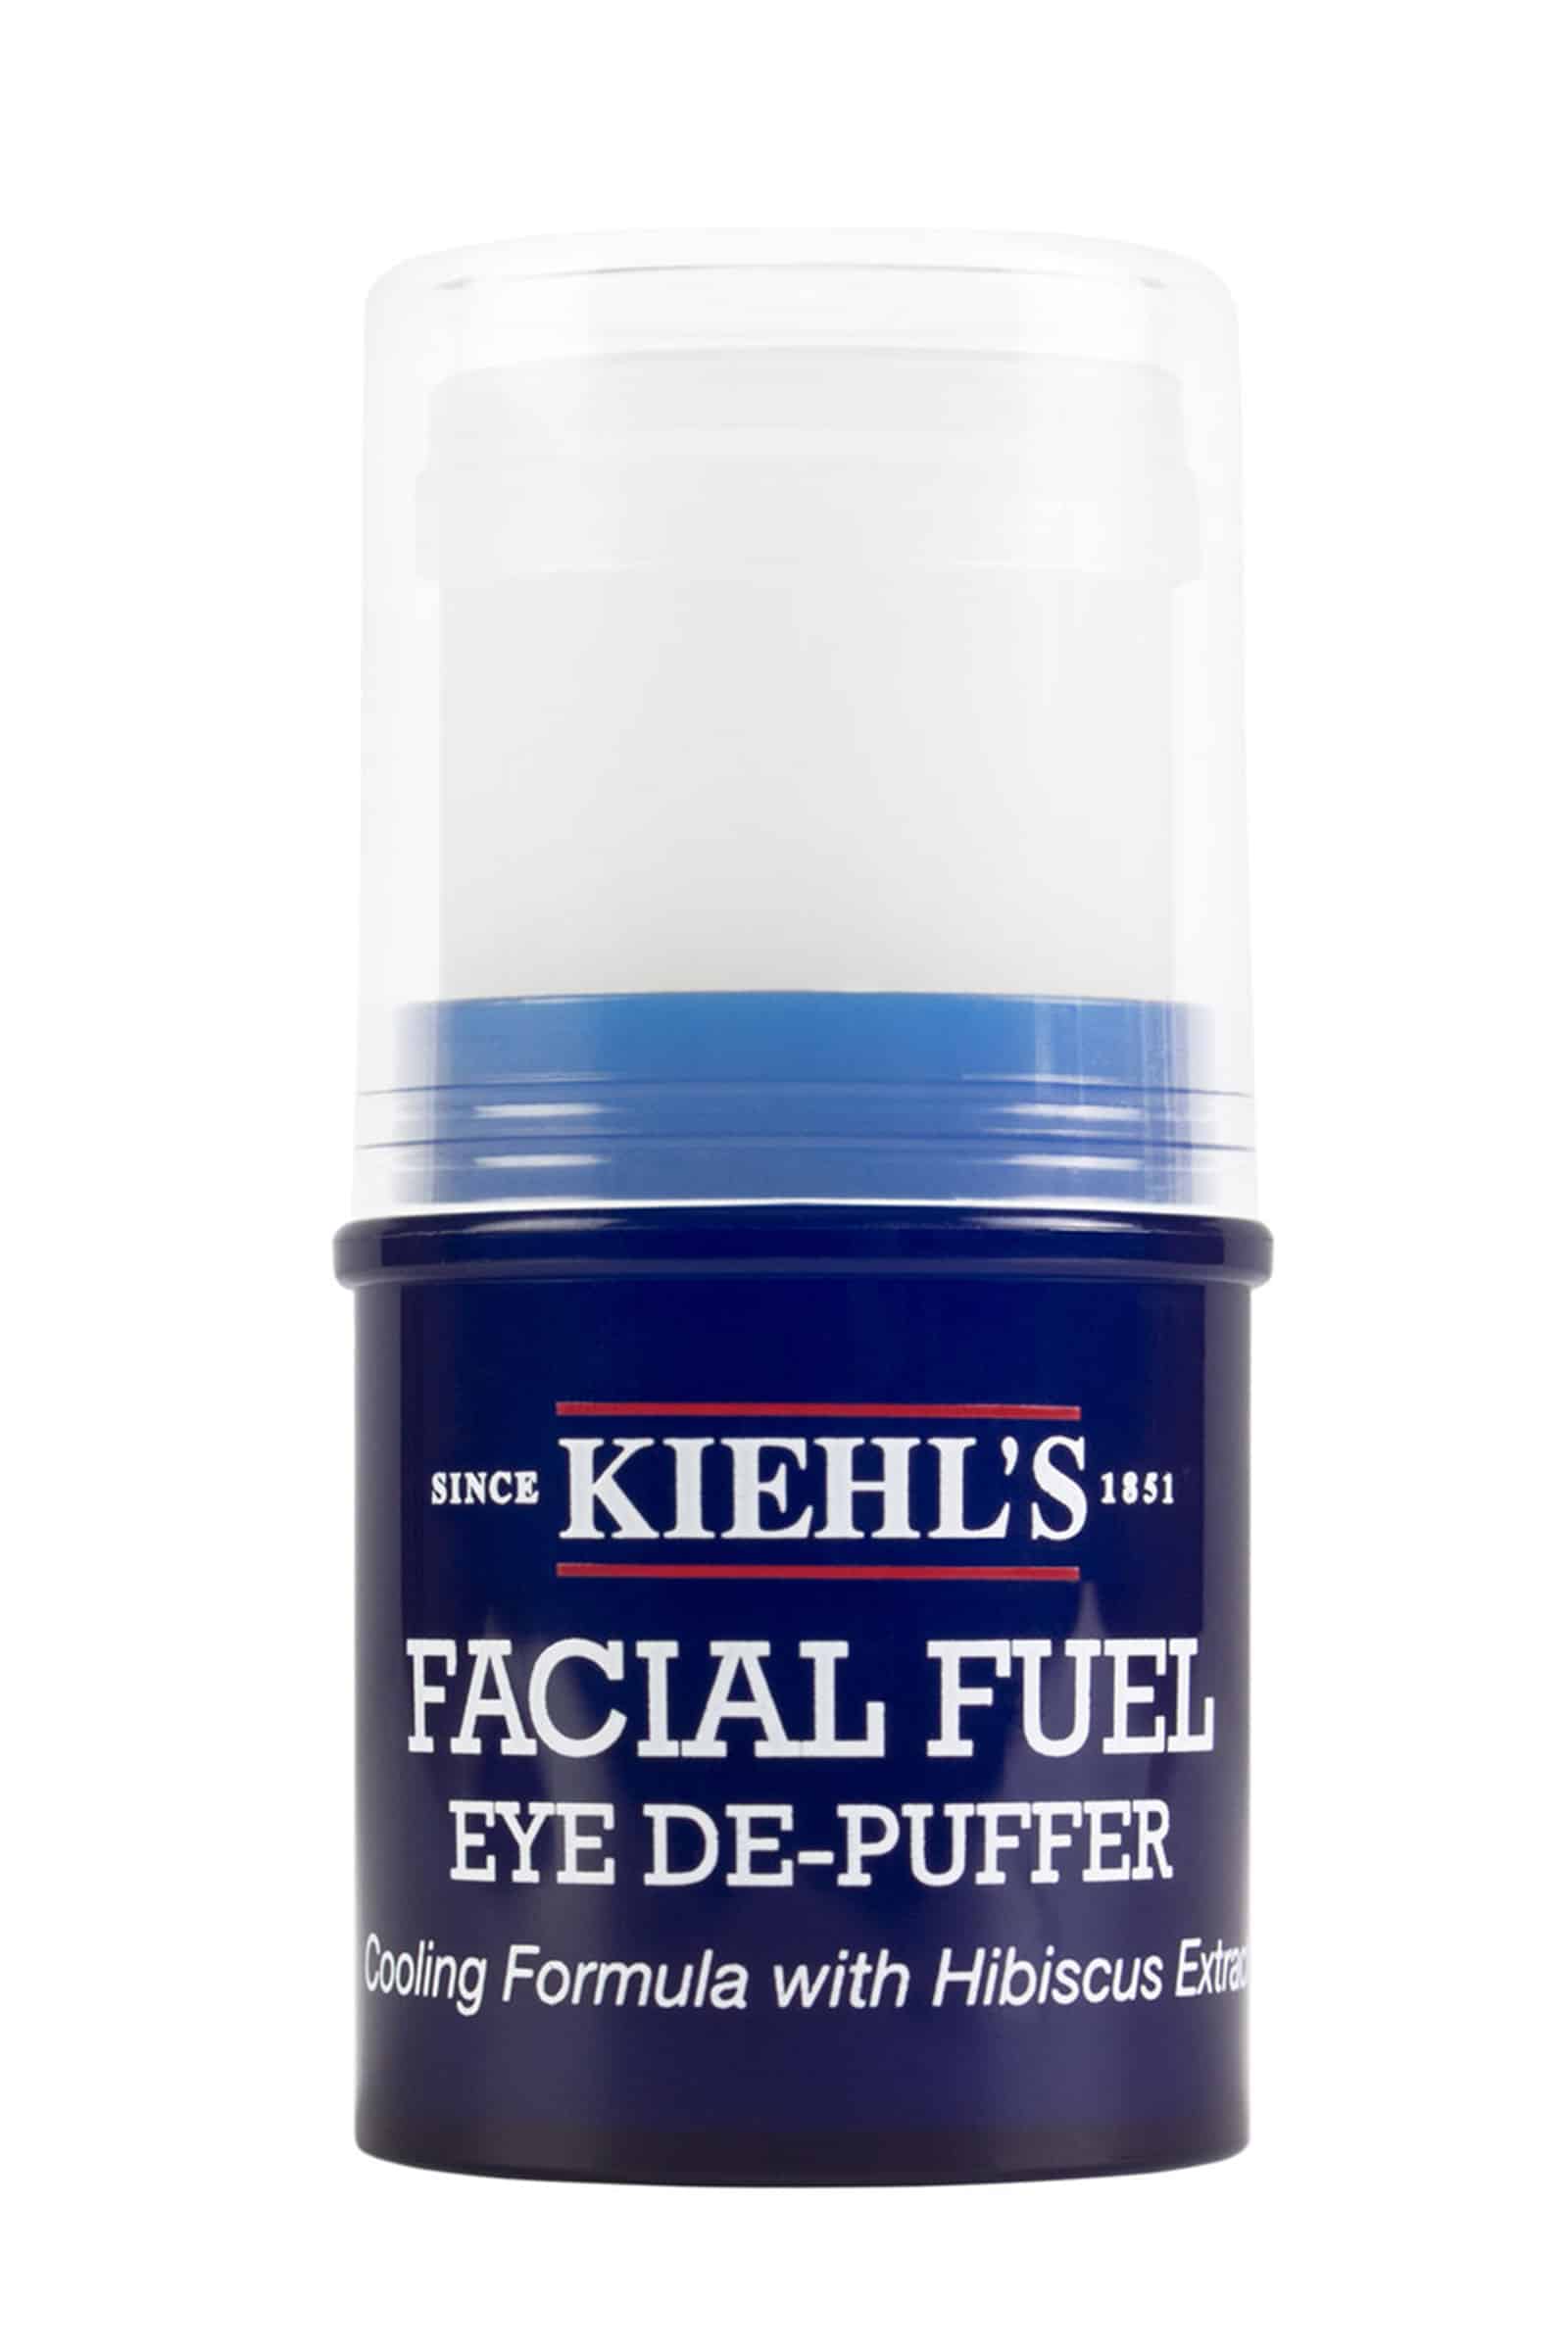 facial fuel eye de puffer kiehls